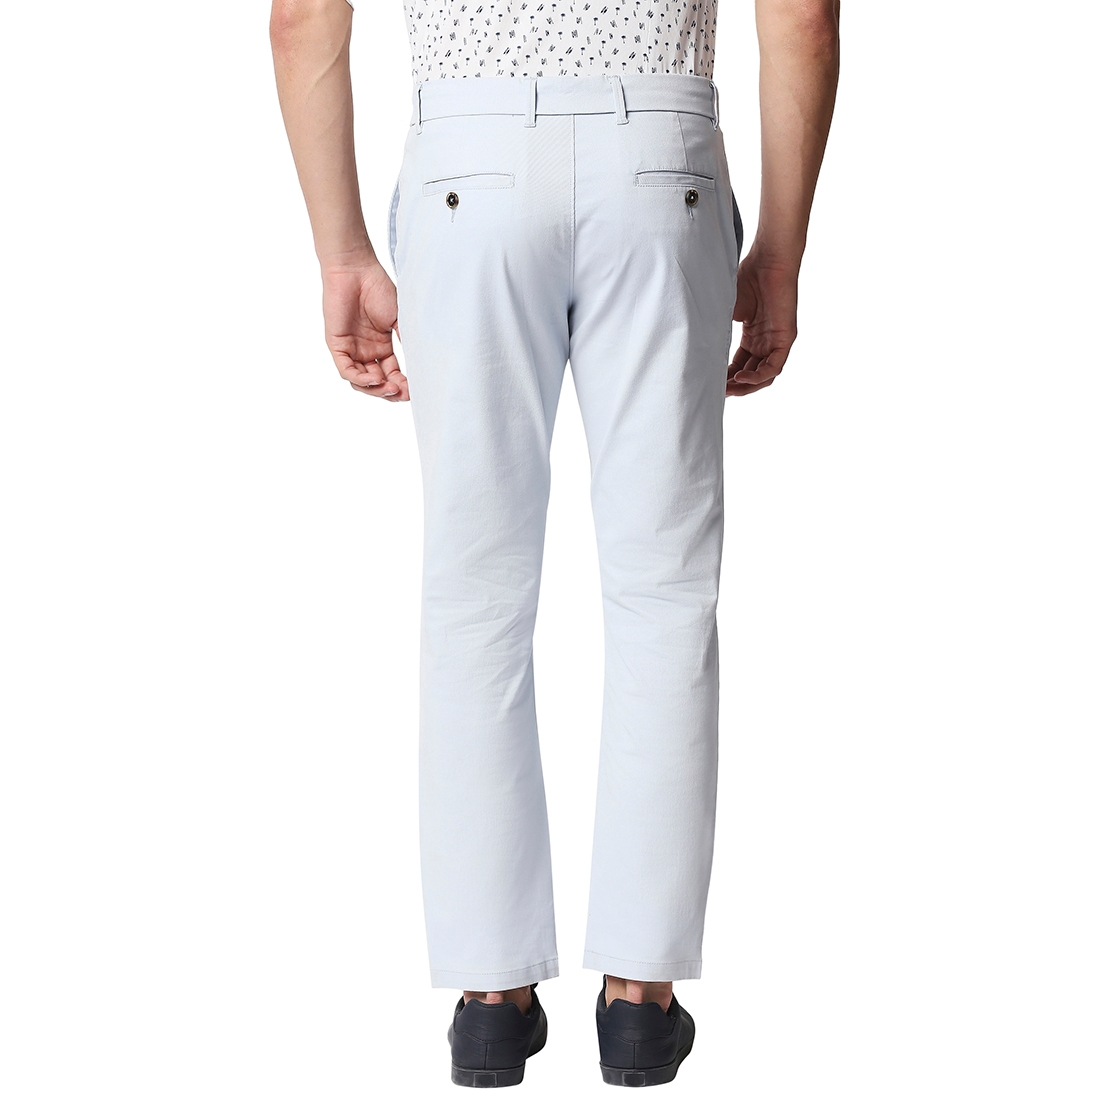 Basics | Men's Light Blue Cotton Blend Solid Trouser 1